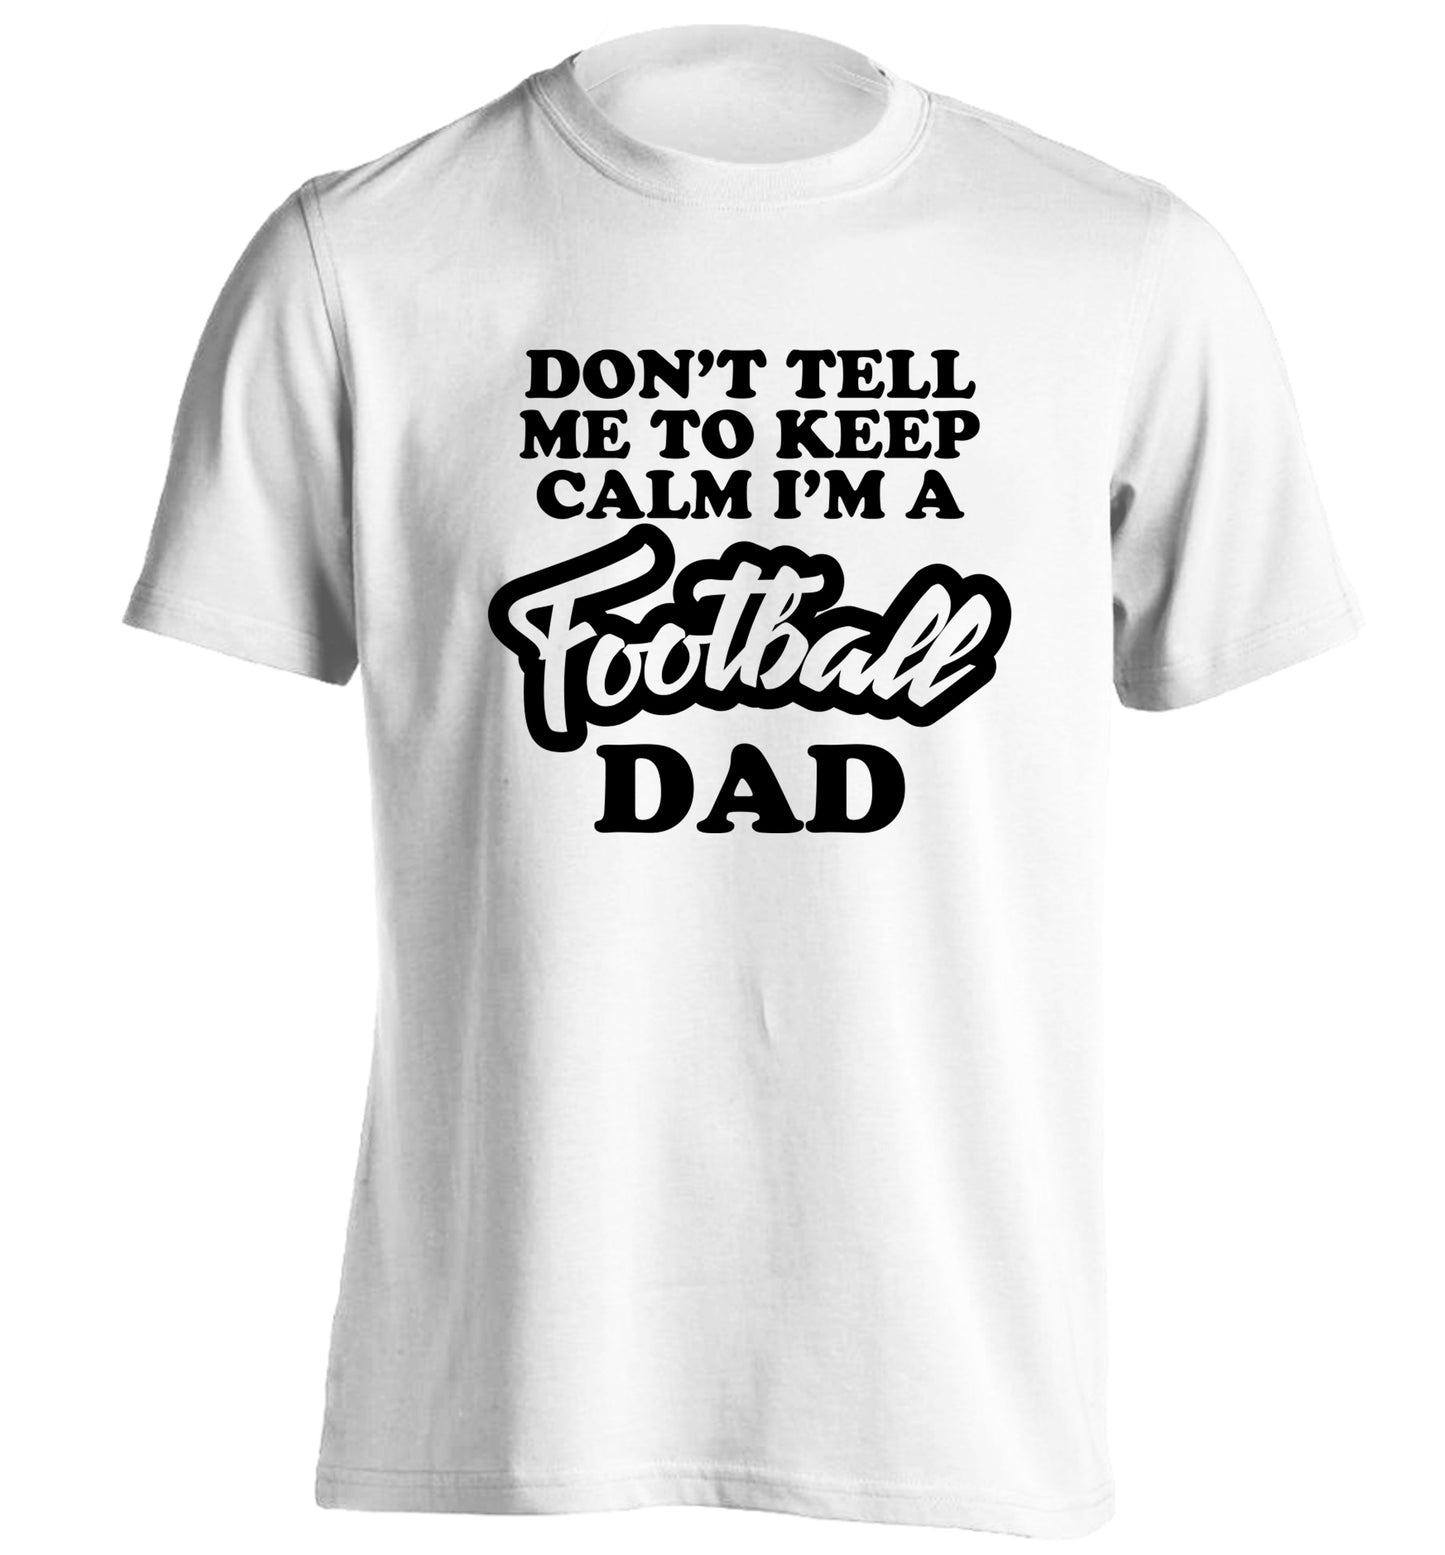 Don't tell me to keep calm I'm a football dad adults unisexwhite Tshirt 2XL